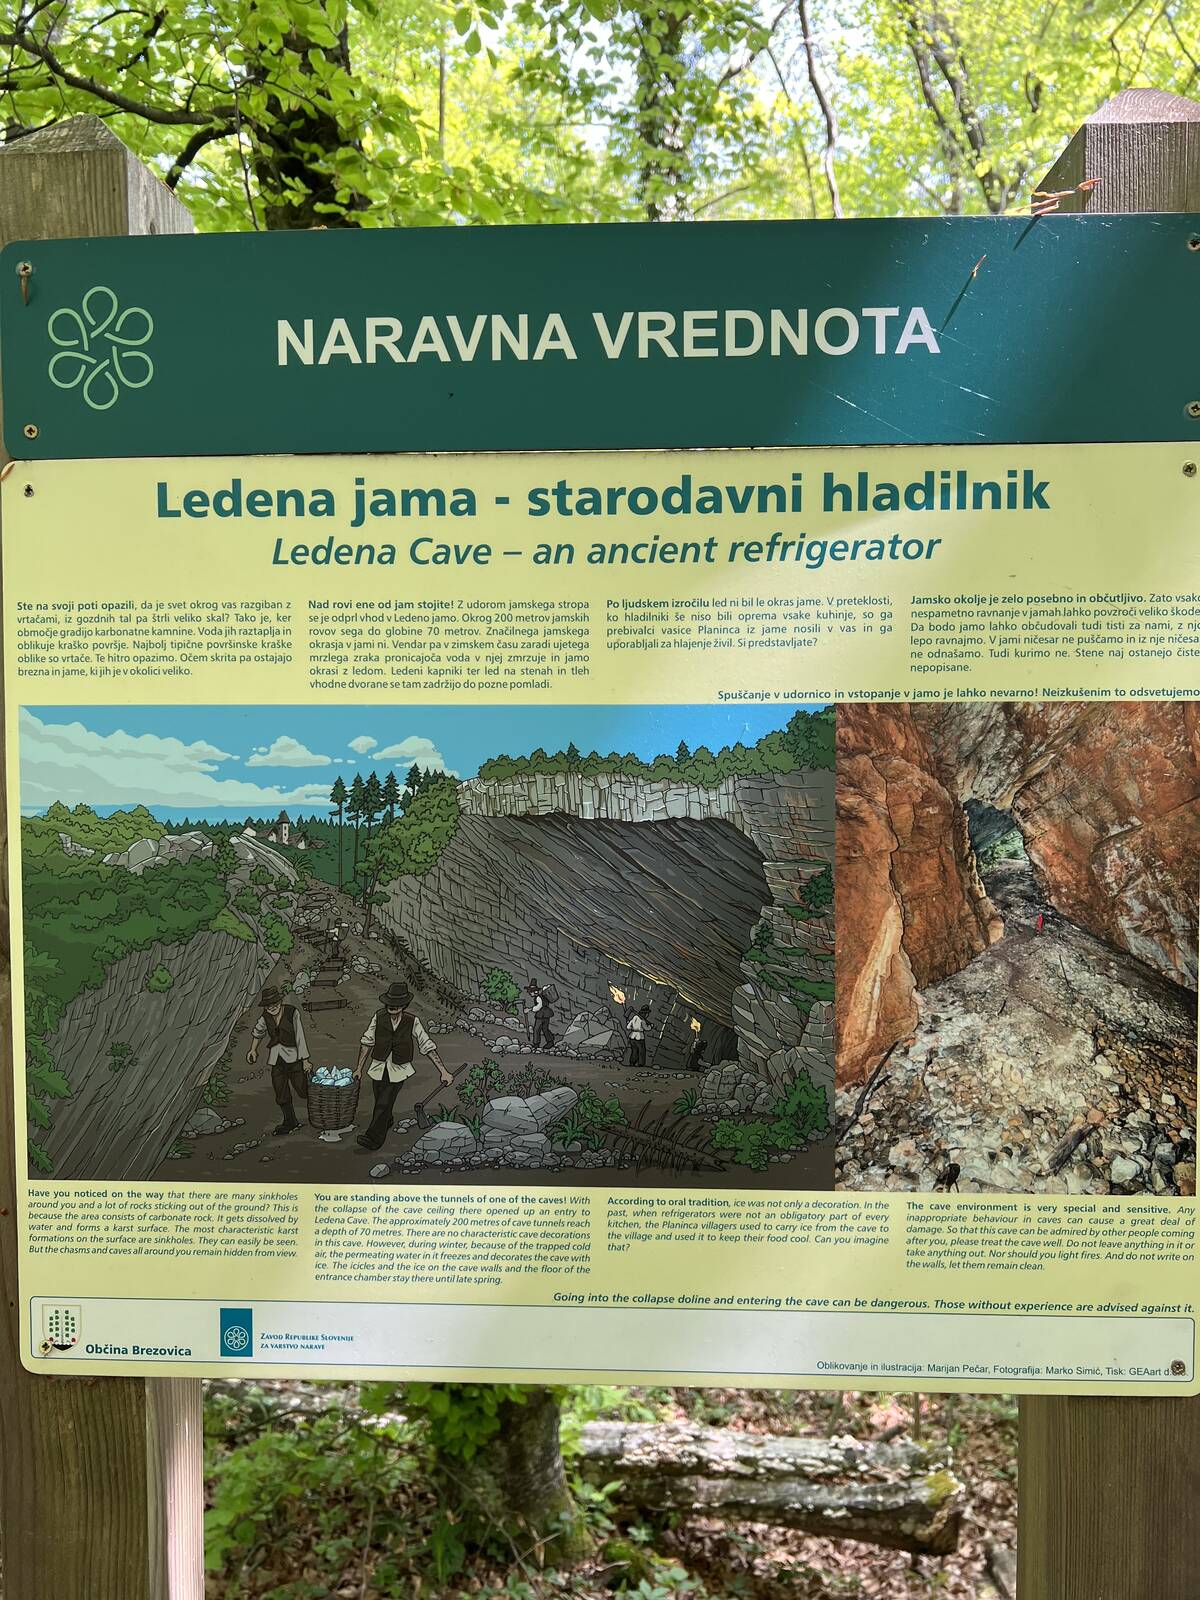 Image of Ledena Jama (Ice Cave) by Luka Esenko